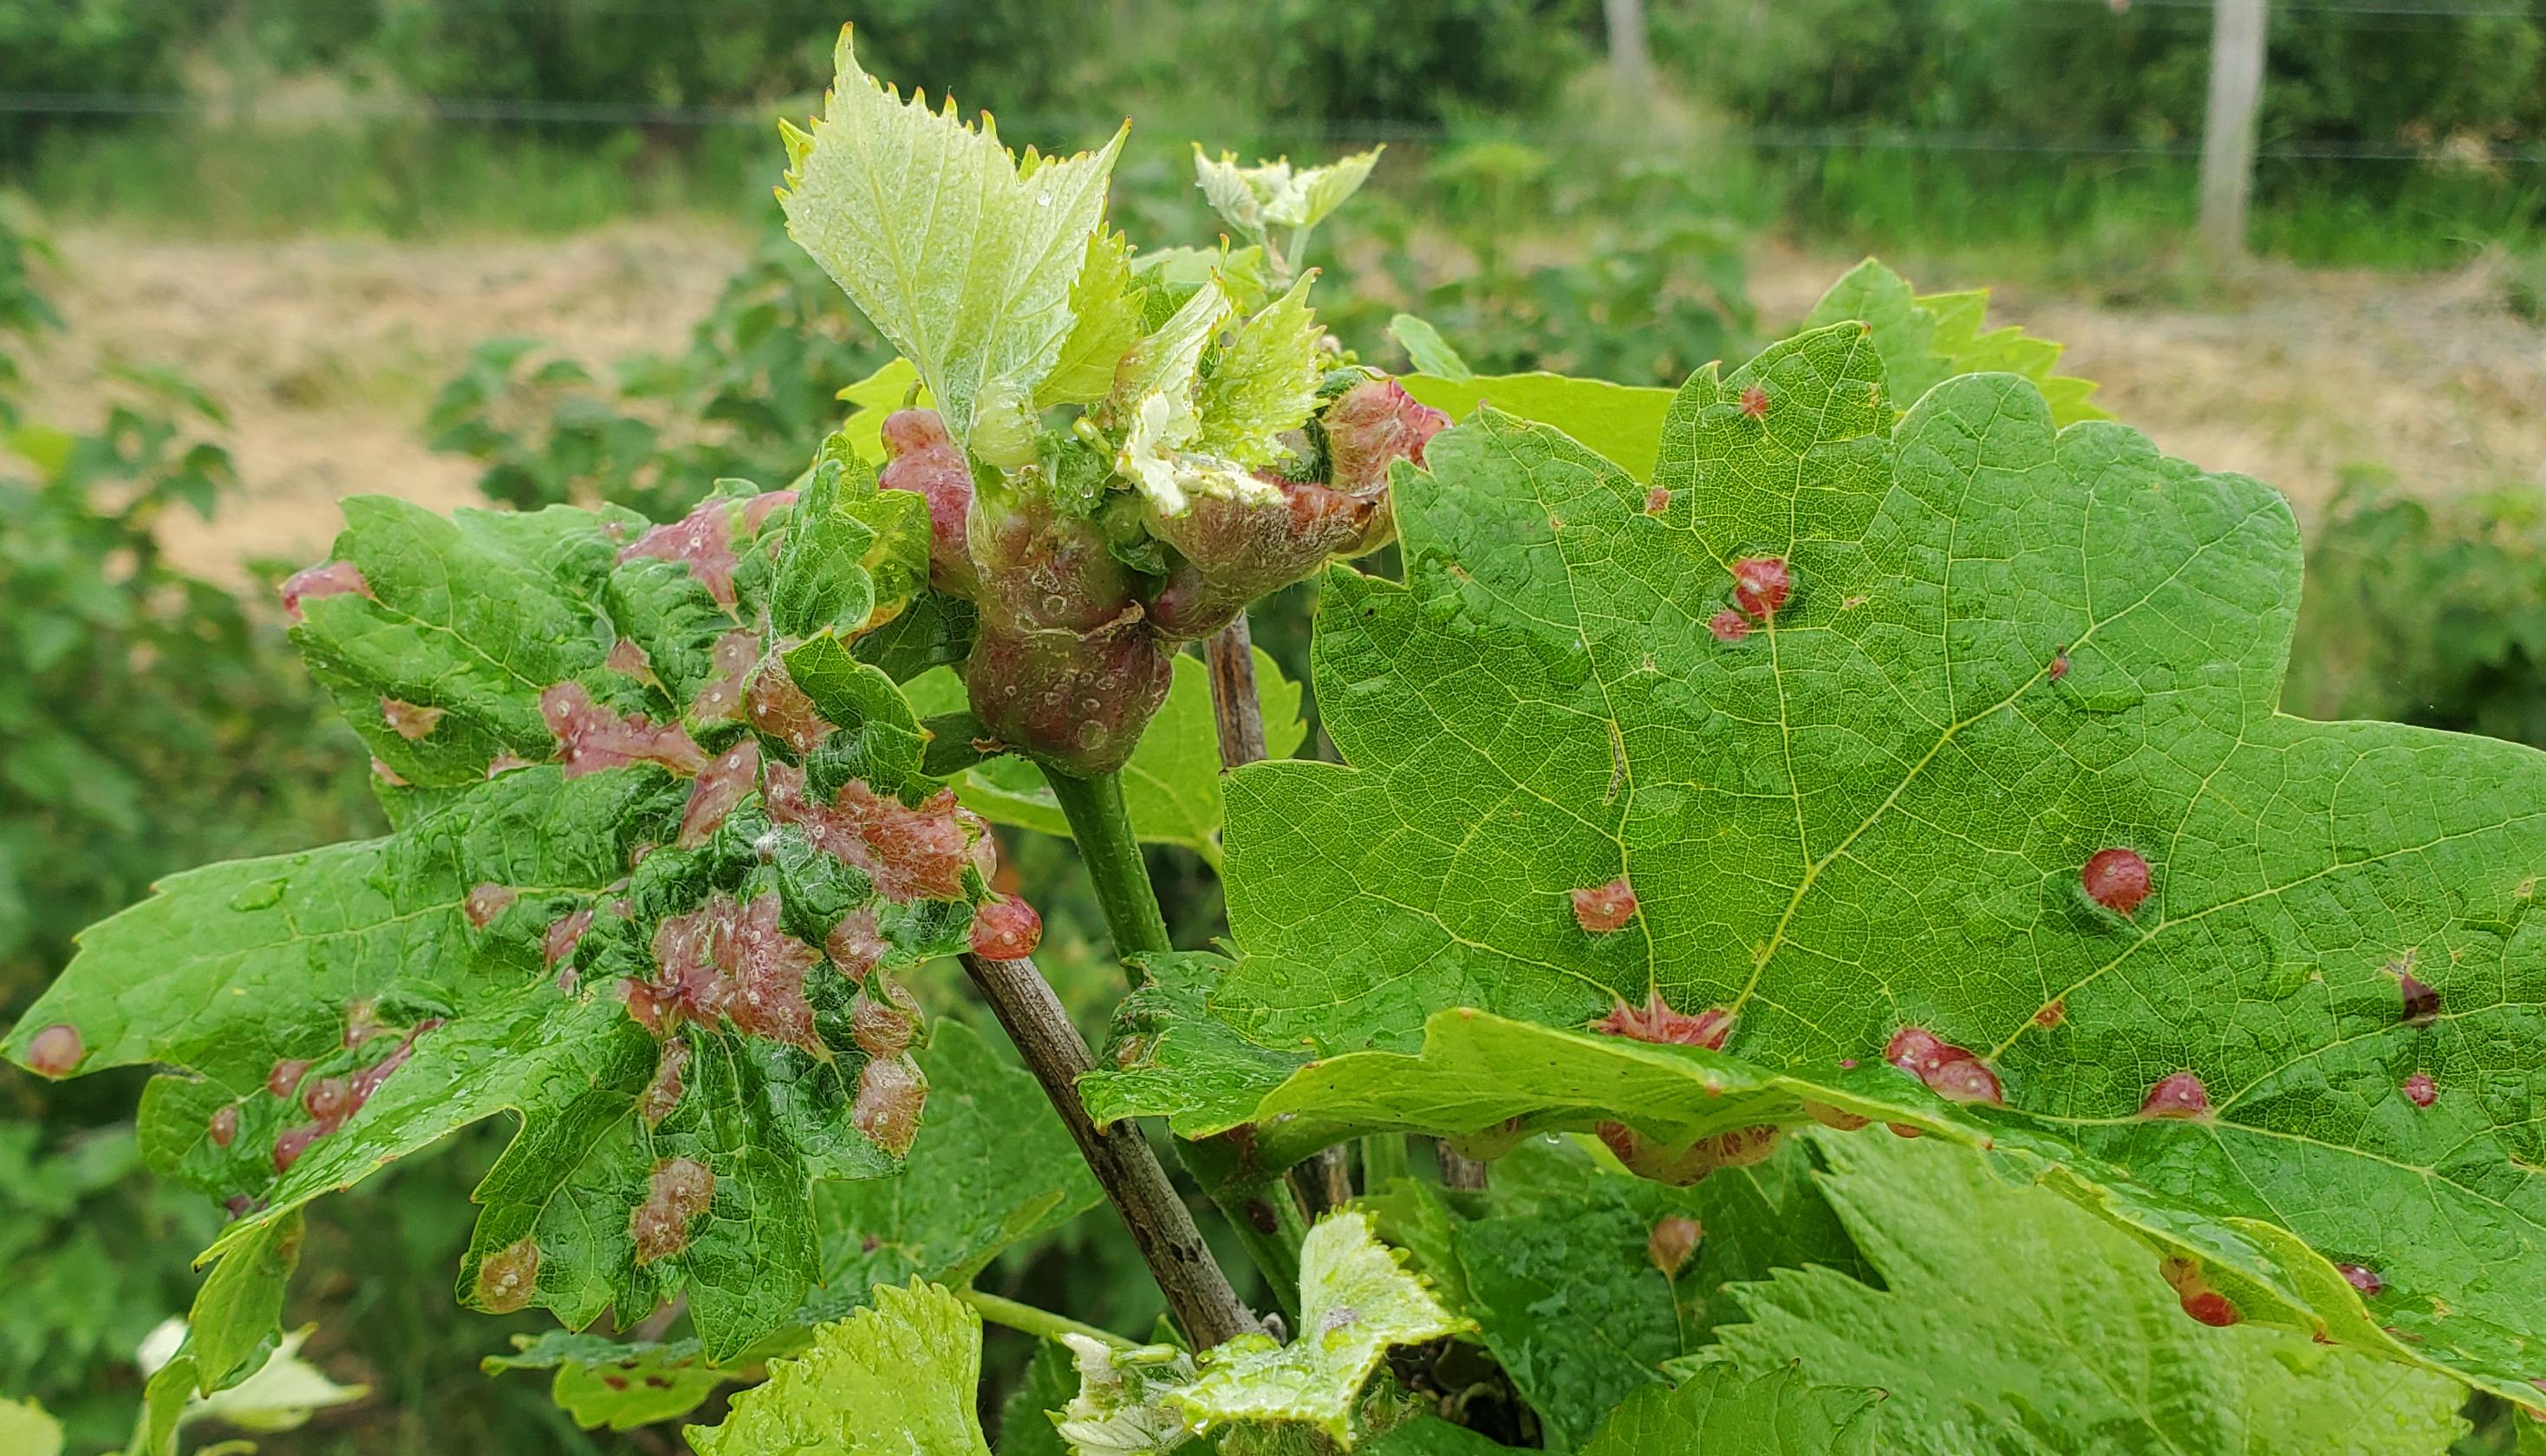 Tumid gallmaker damage on grapes